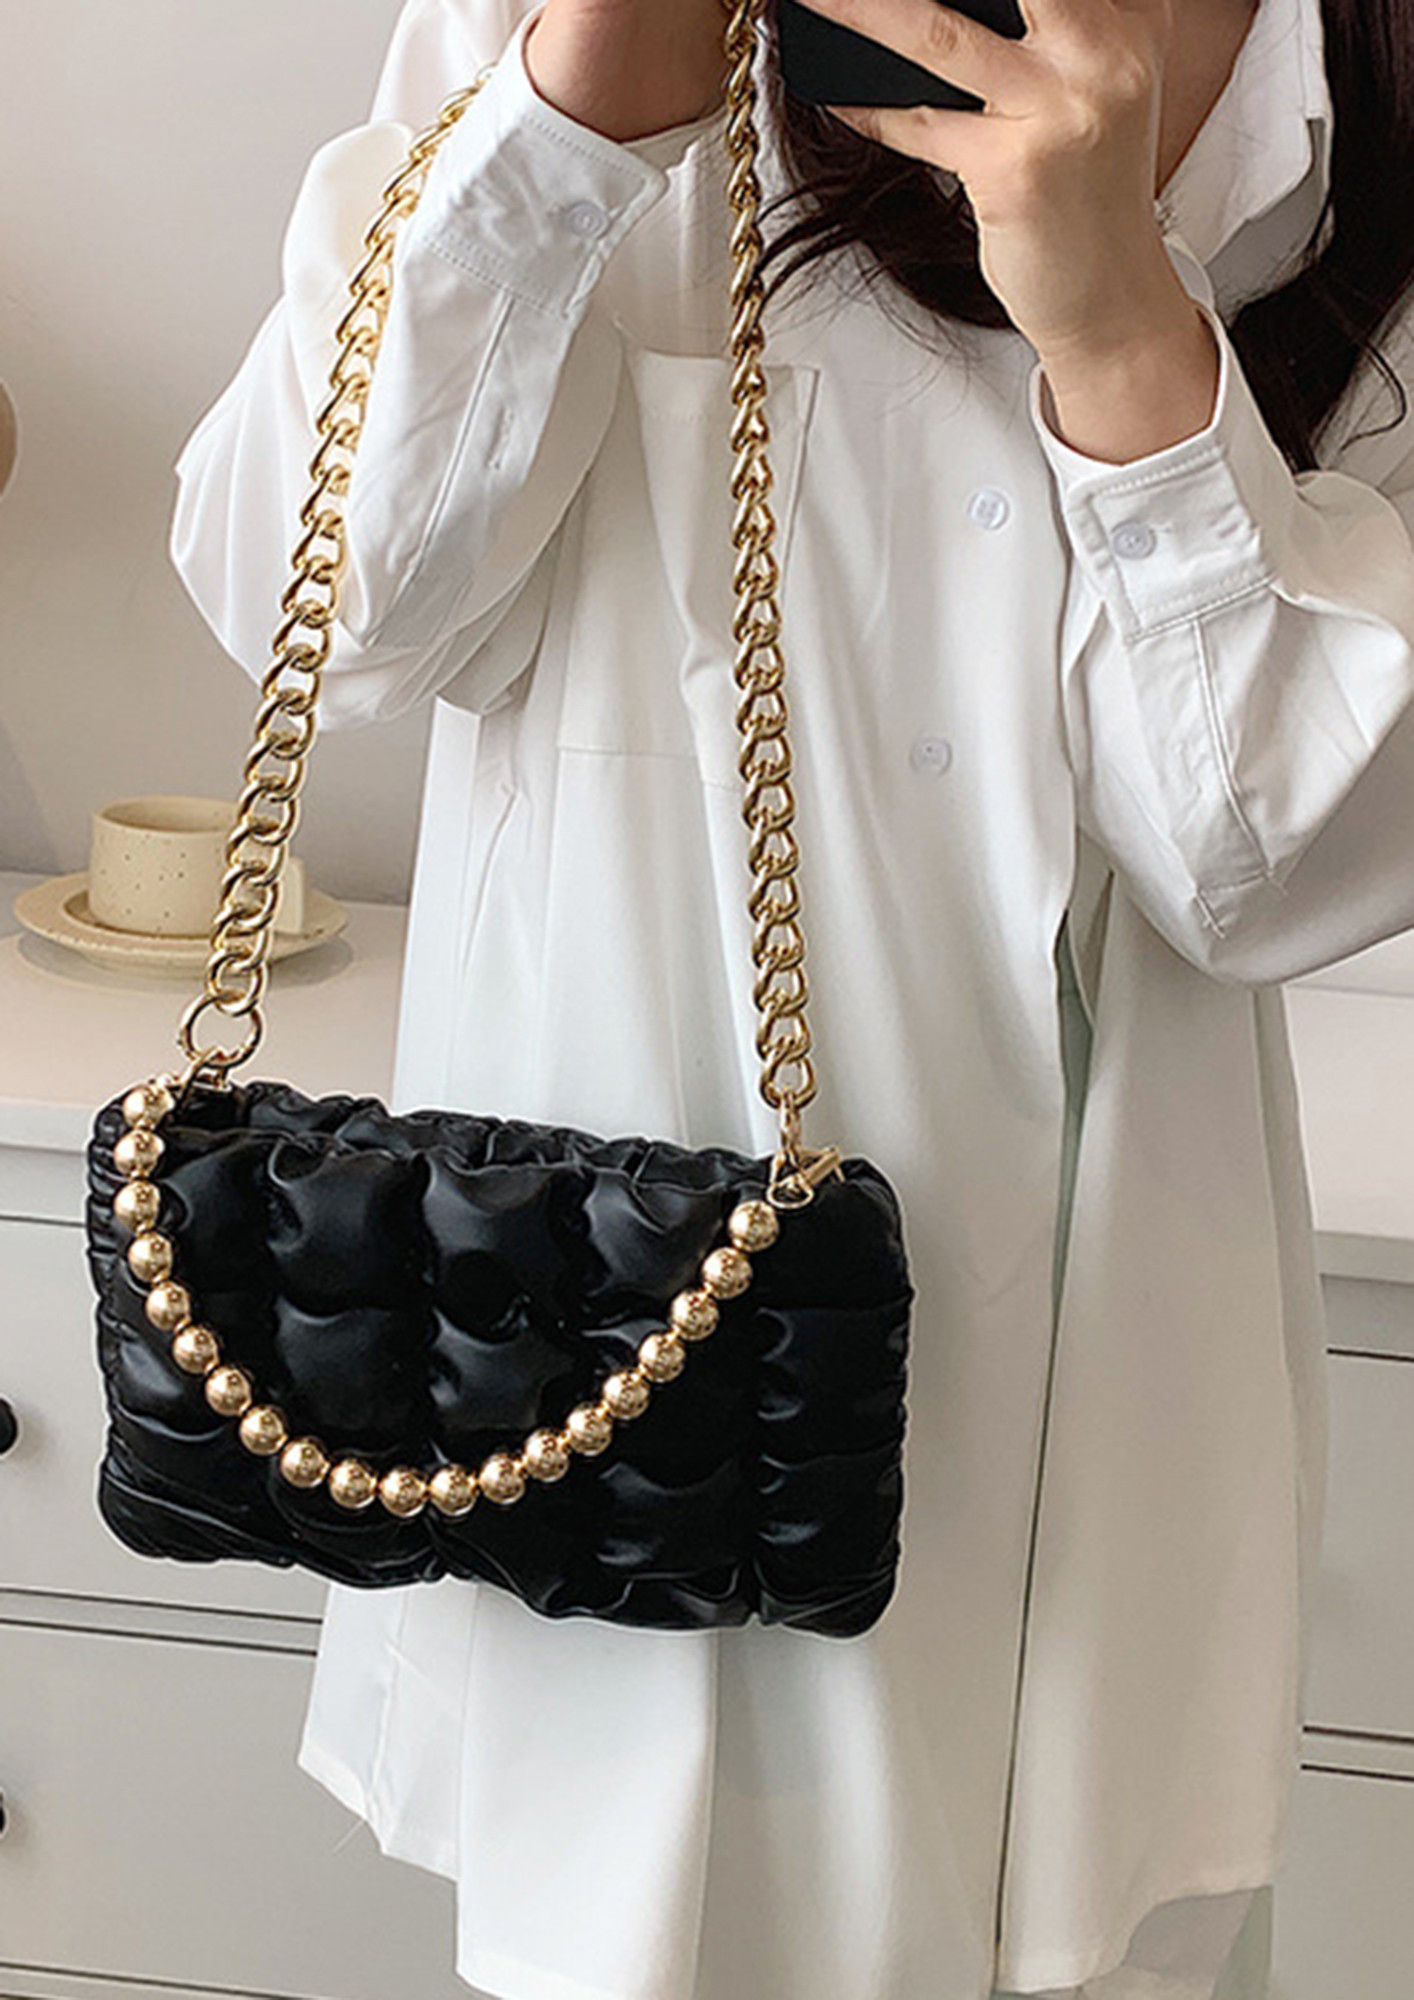 Susan Gail Genuine Patent Leather Black Hand Bag | eBay